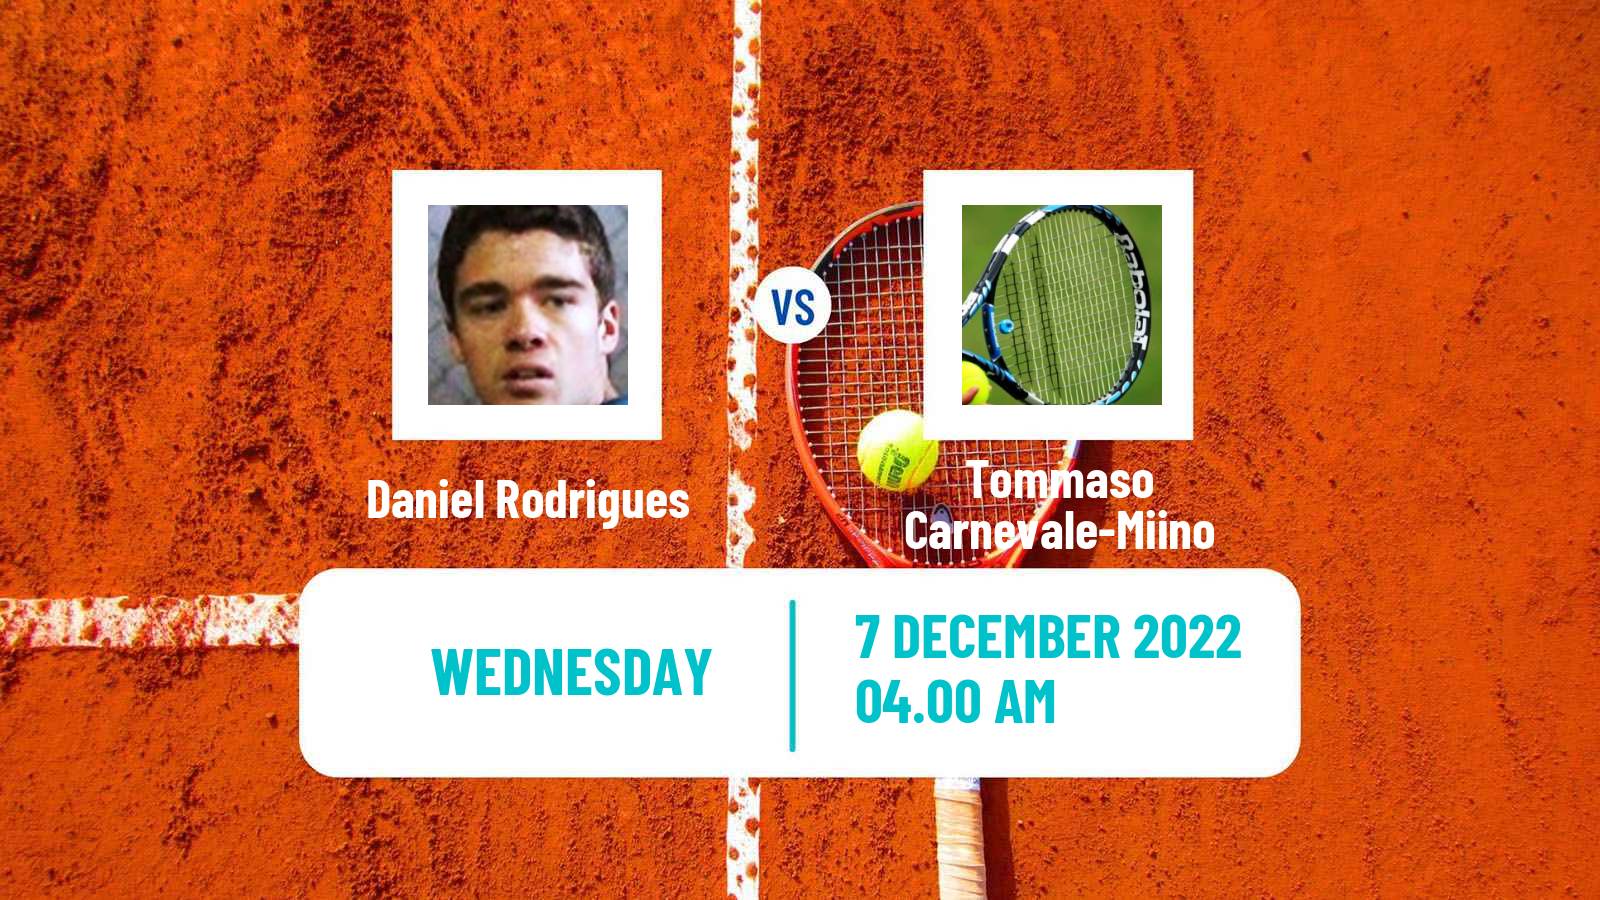 Tennis ITF Tournaments Daniel Rodrigues - Tommaso Carnevale-Miino